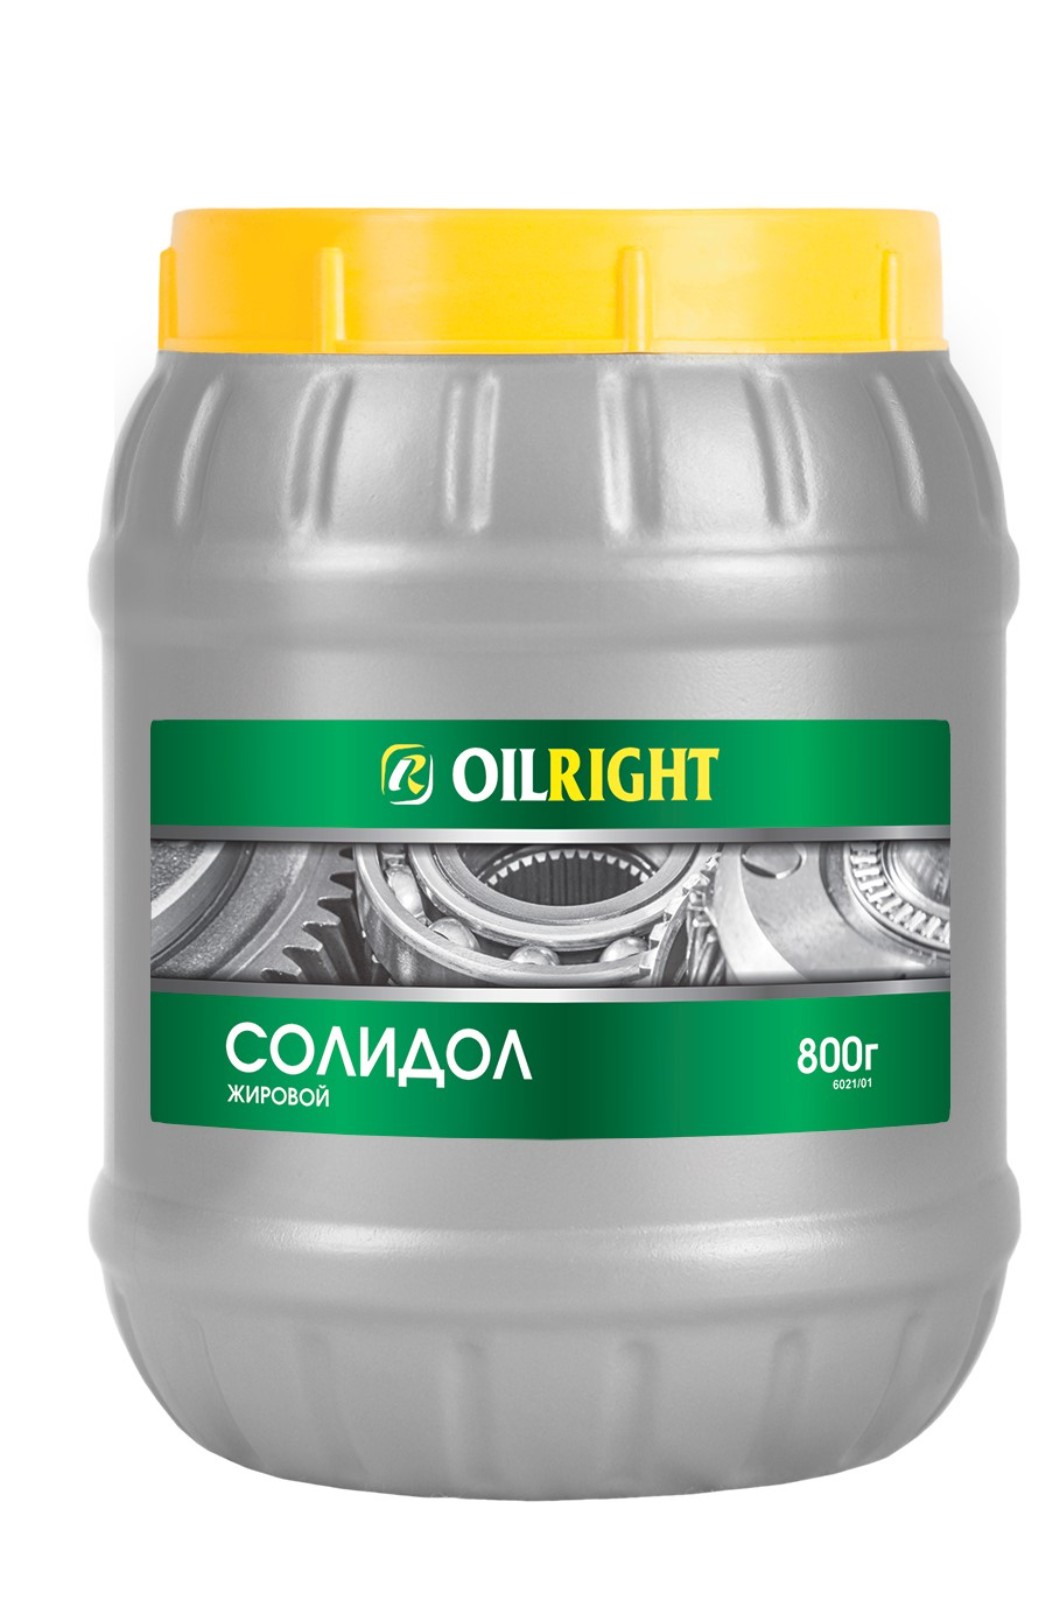 Смазка OILRIGHT Солидол жировой 800г смазка oilright солидол жировой 5кг